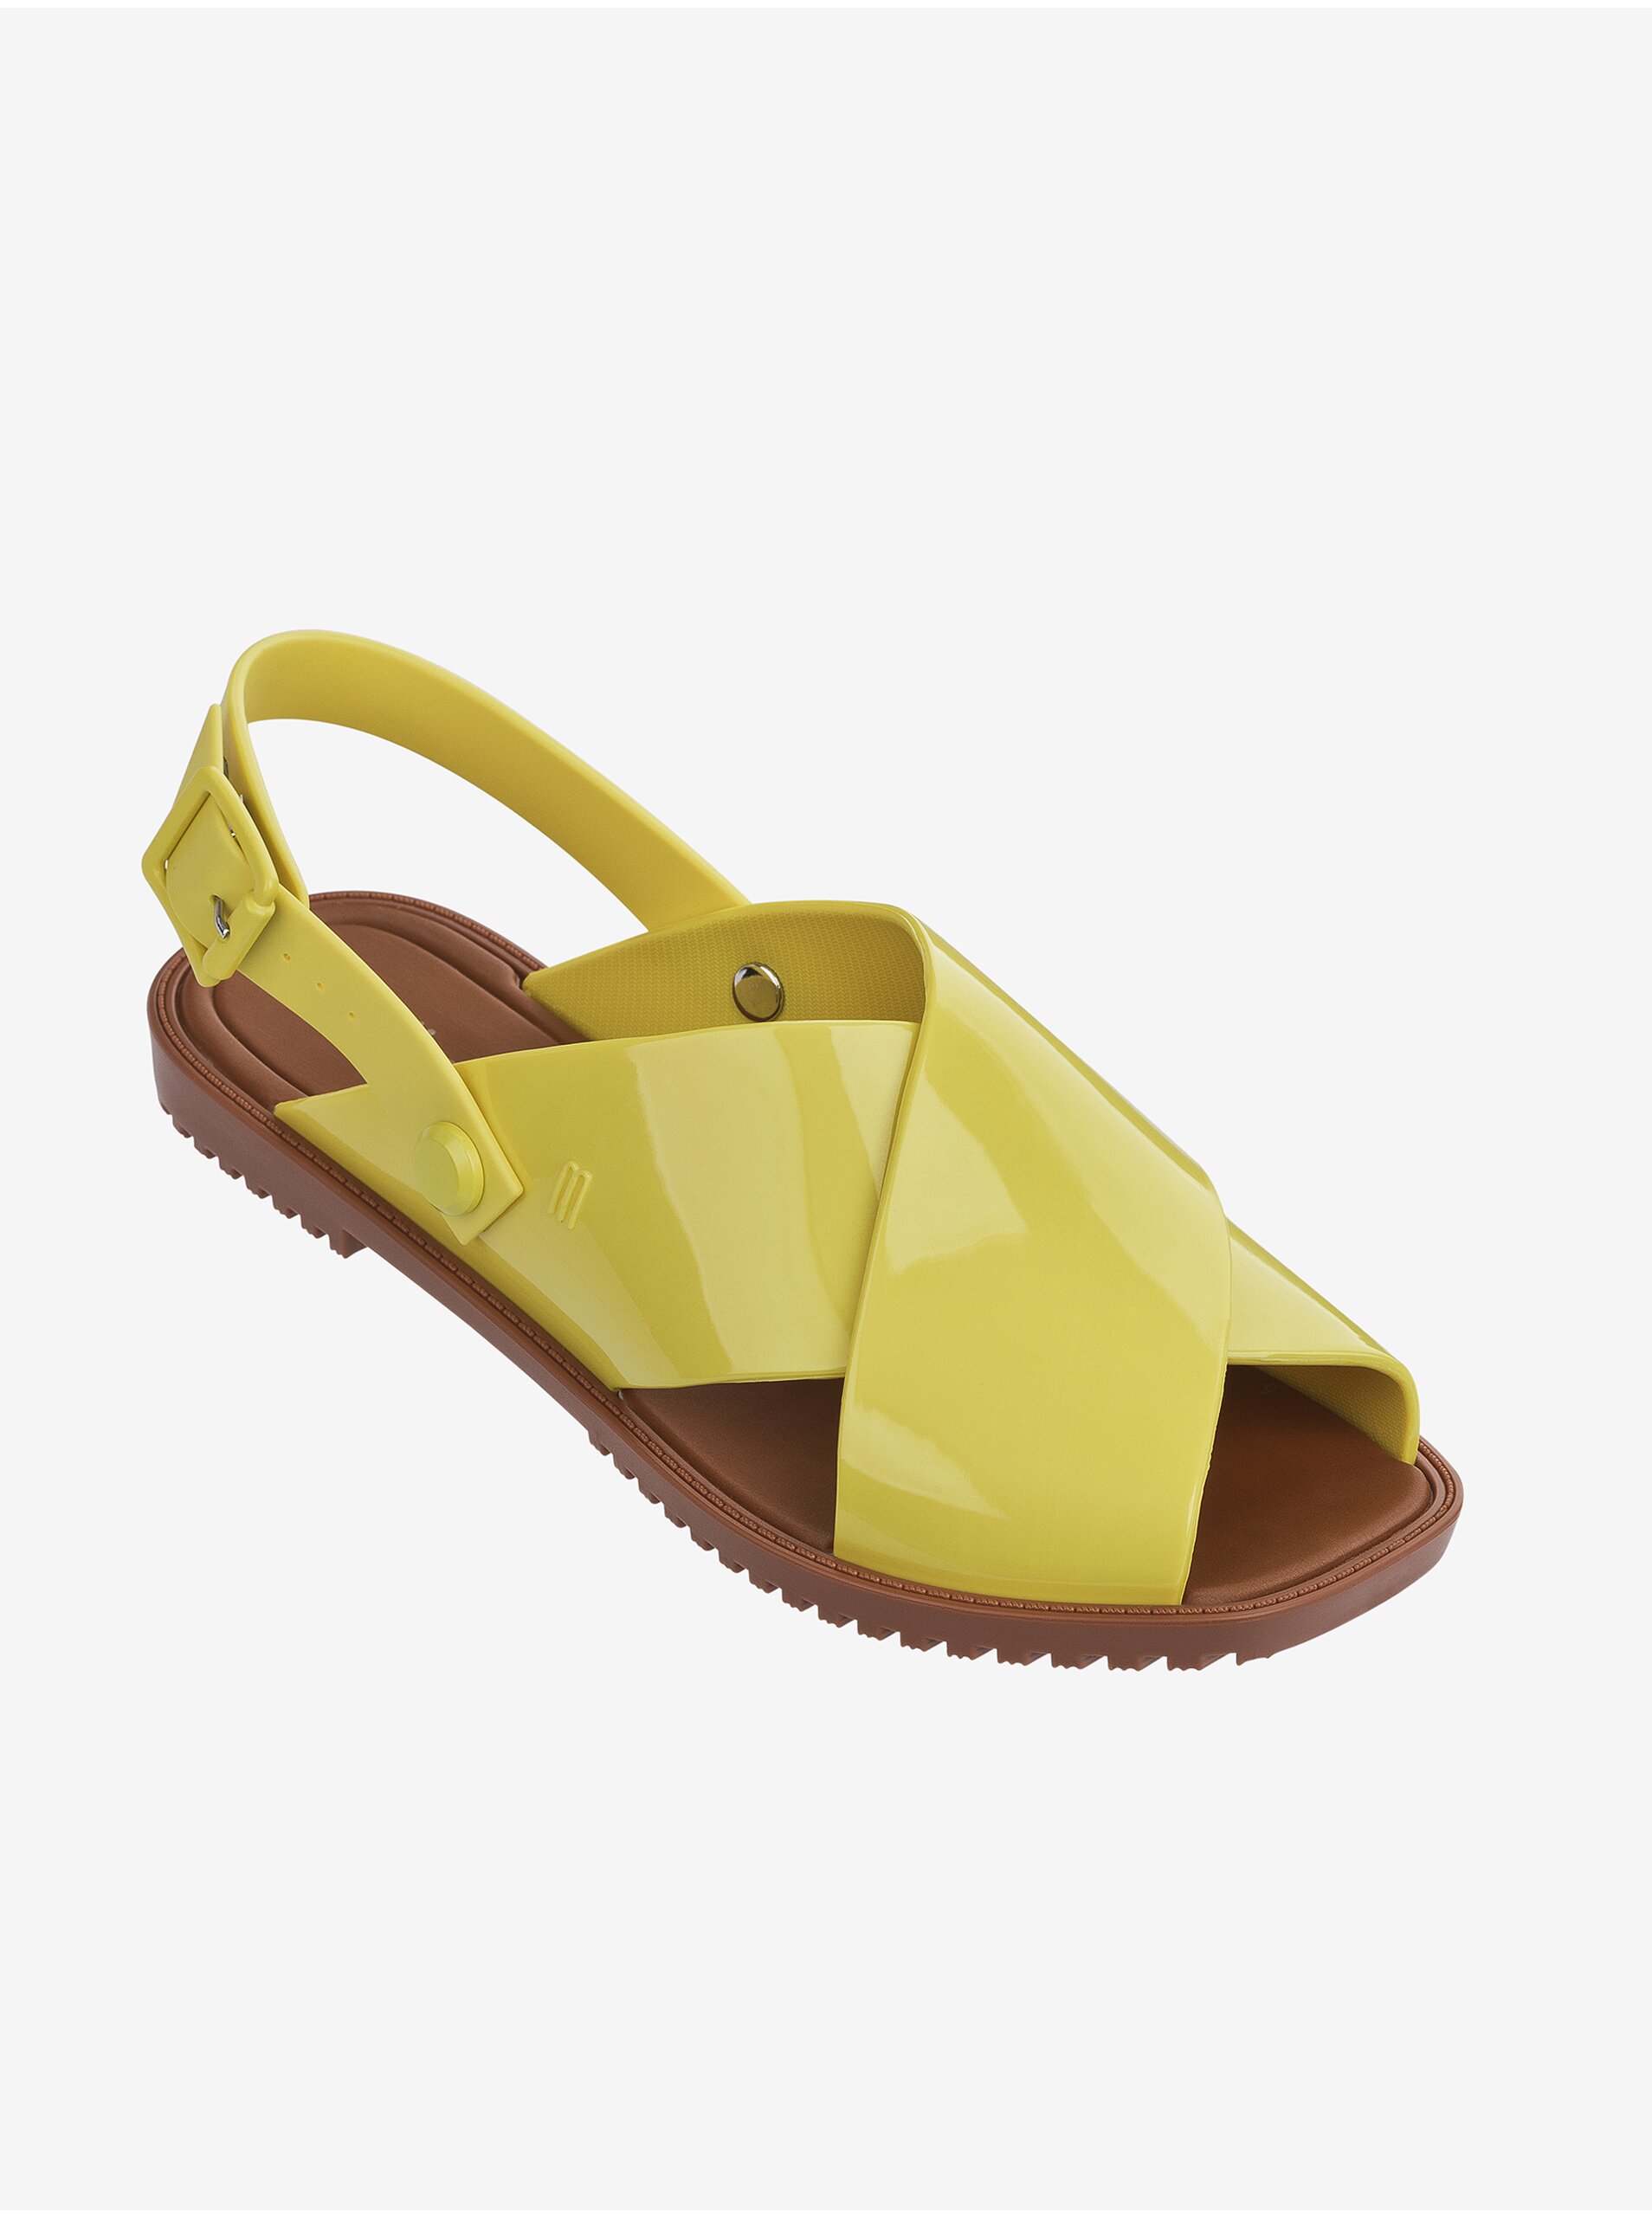 Lacno Svetlozelené dámske sandálky Melissa Sauce Sandal